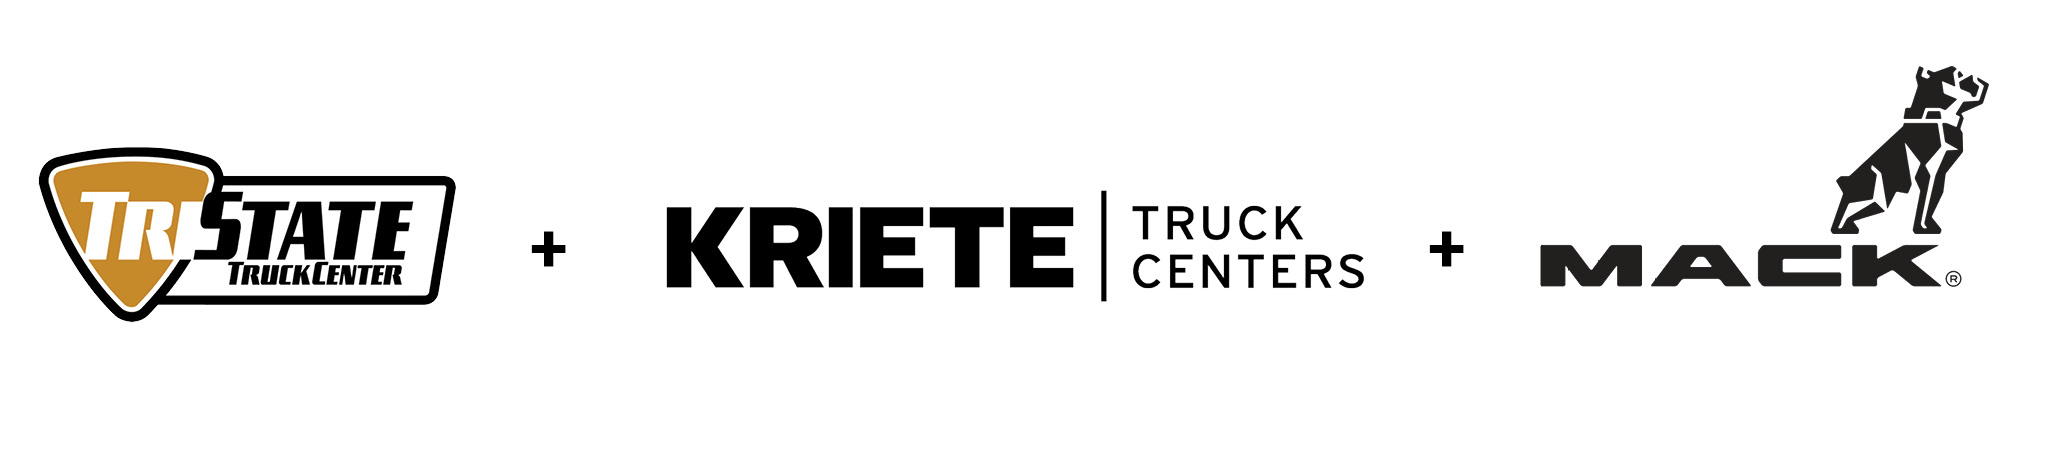 Tri State Truck Center + Mack + Kriete Truck Centers logos